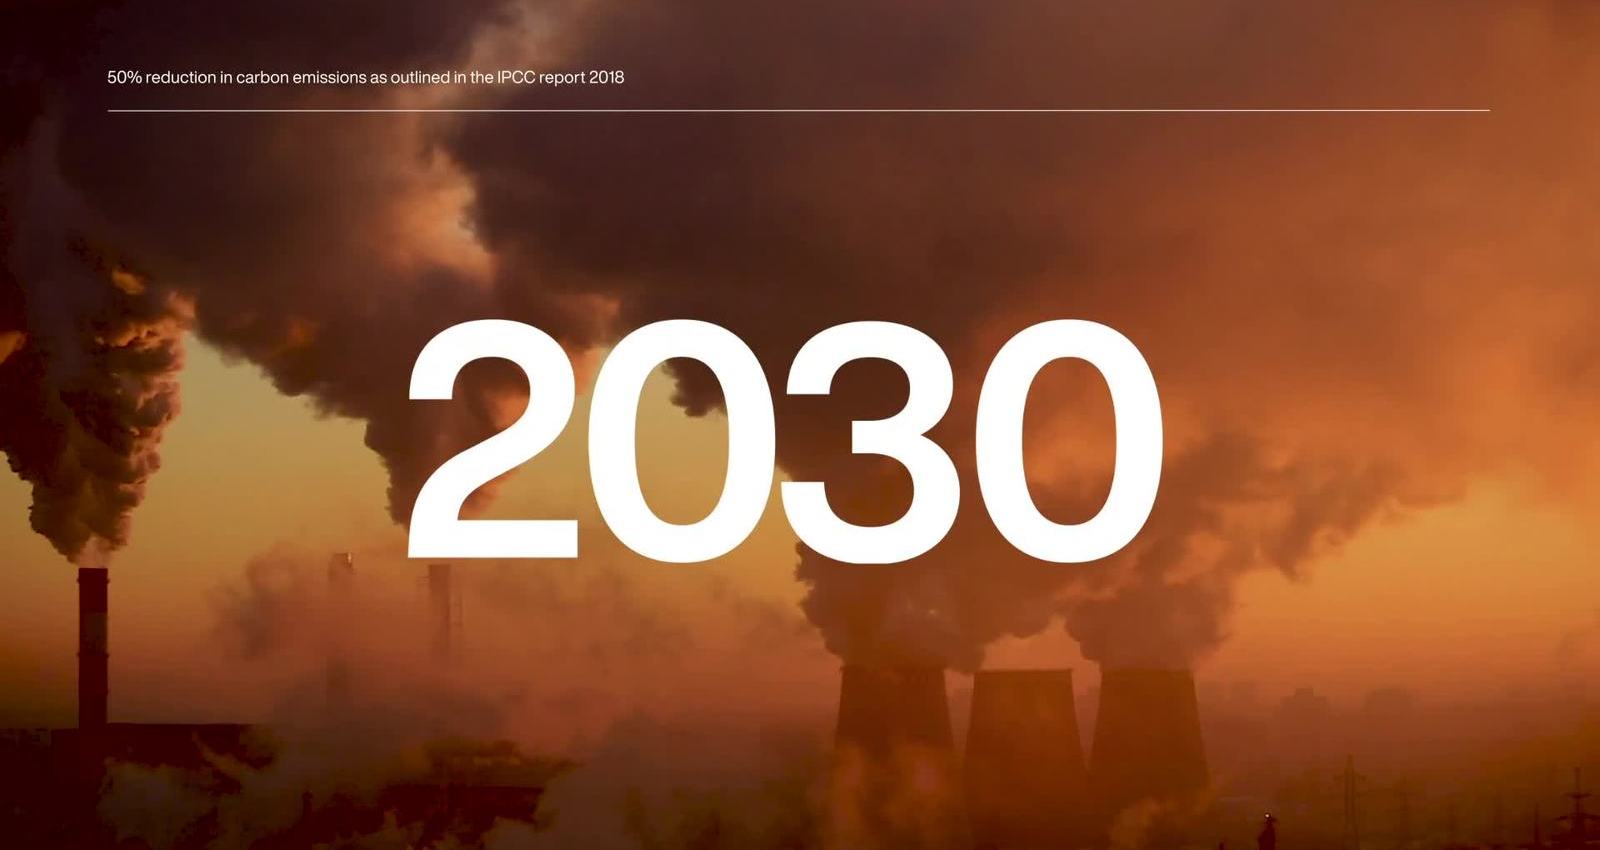 The 2030 Calculator